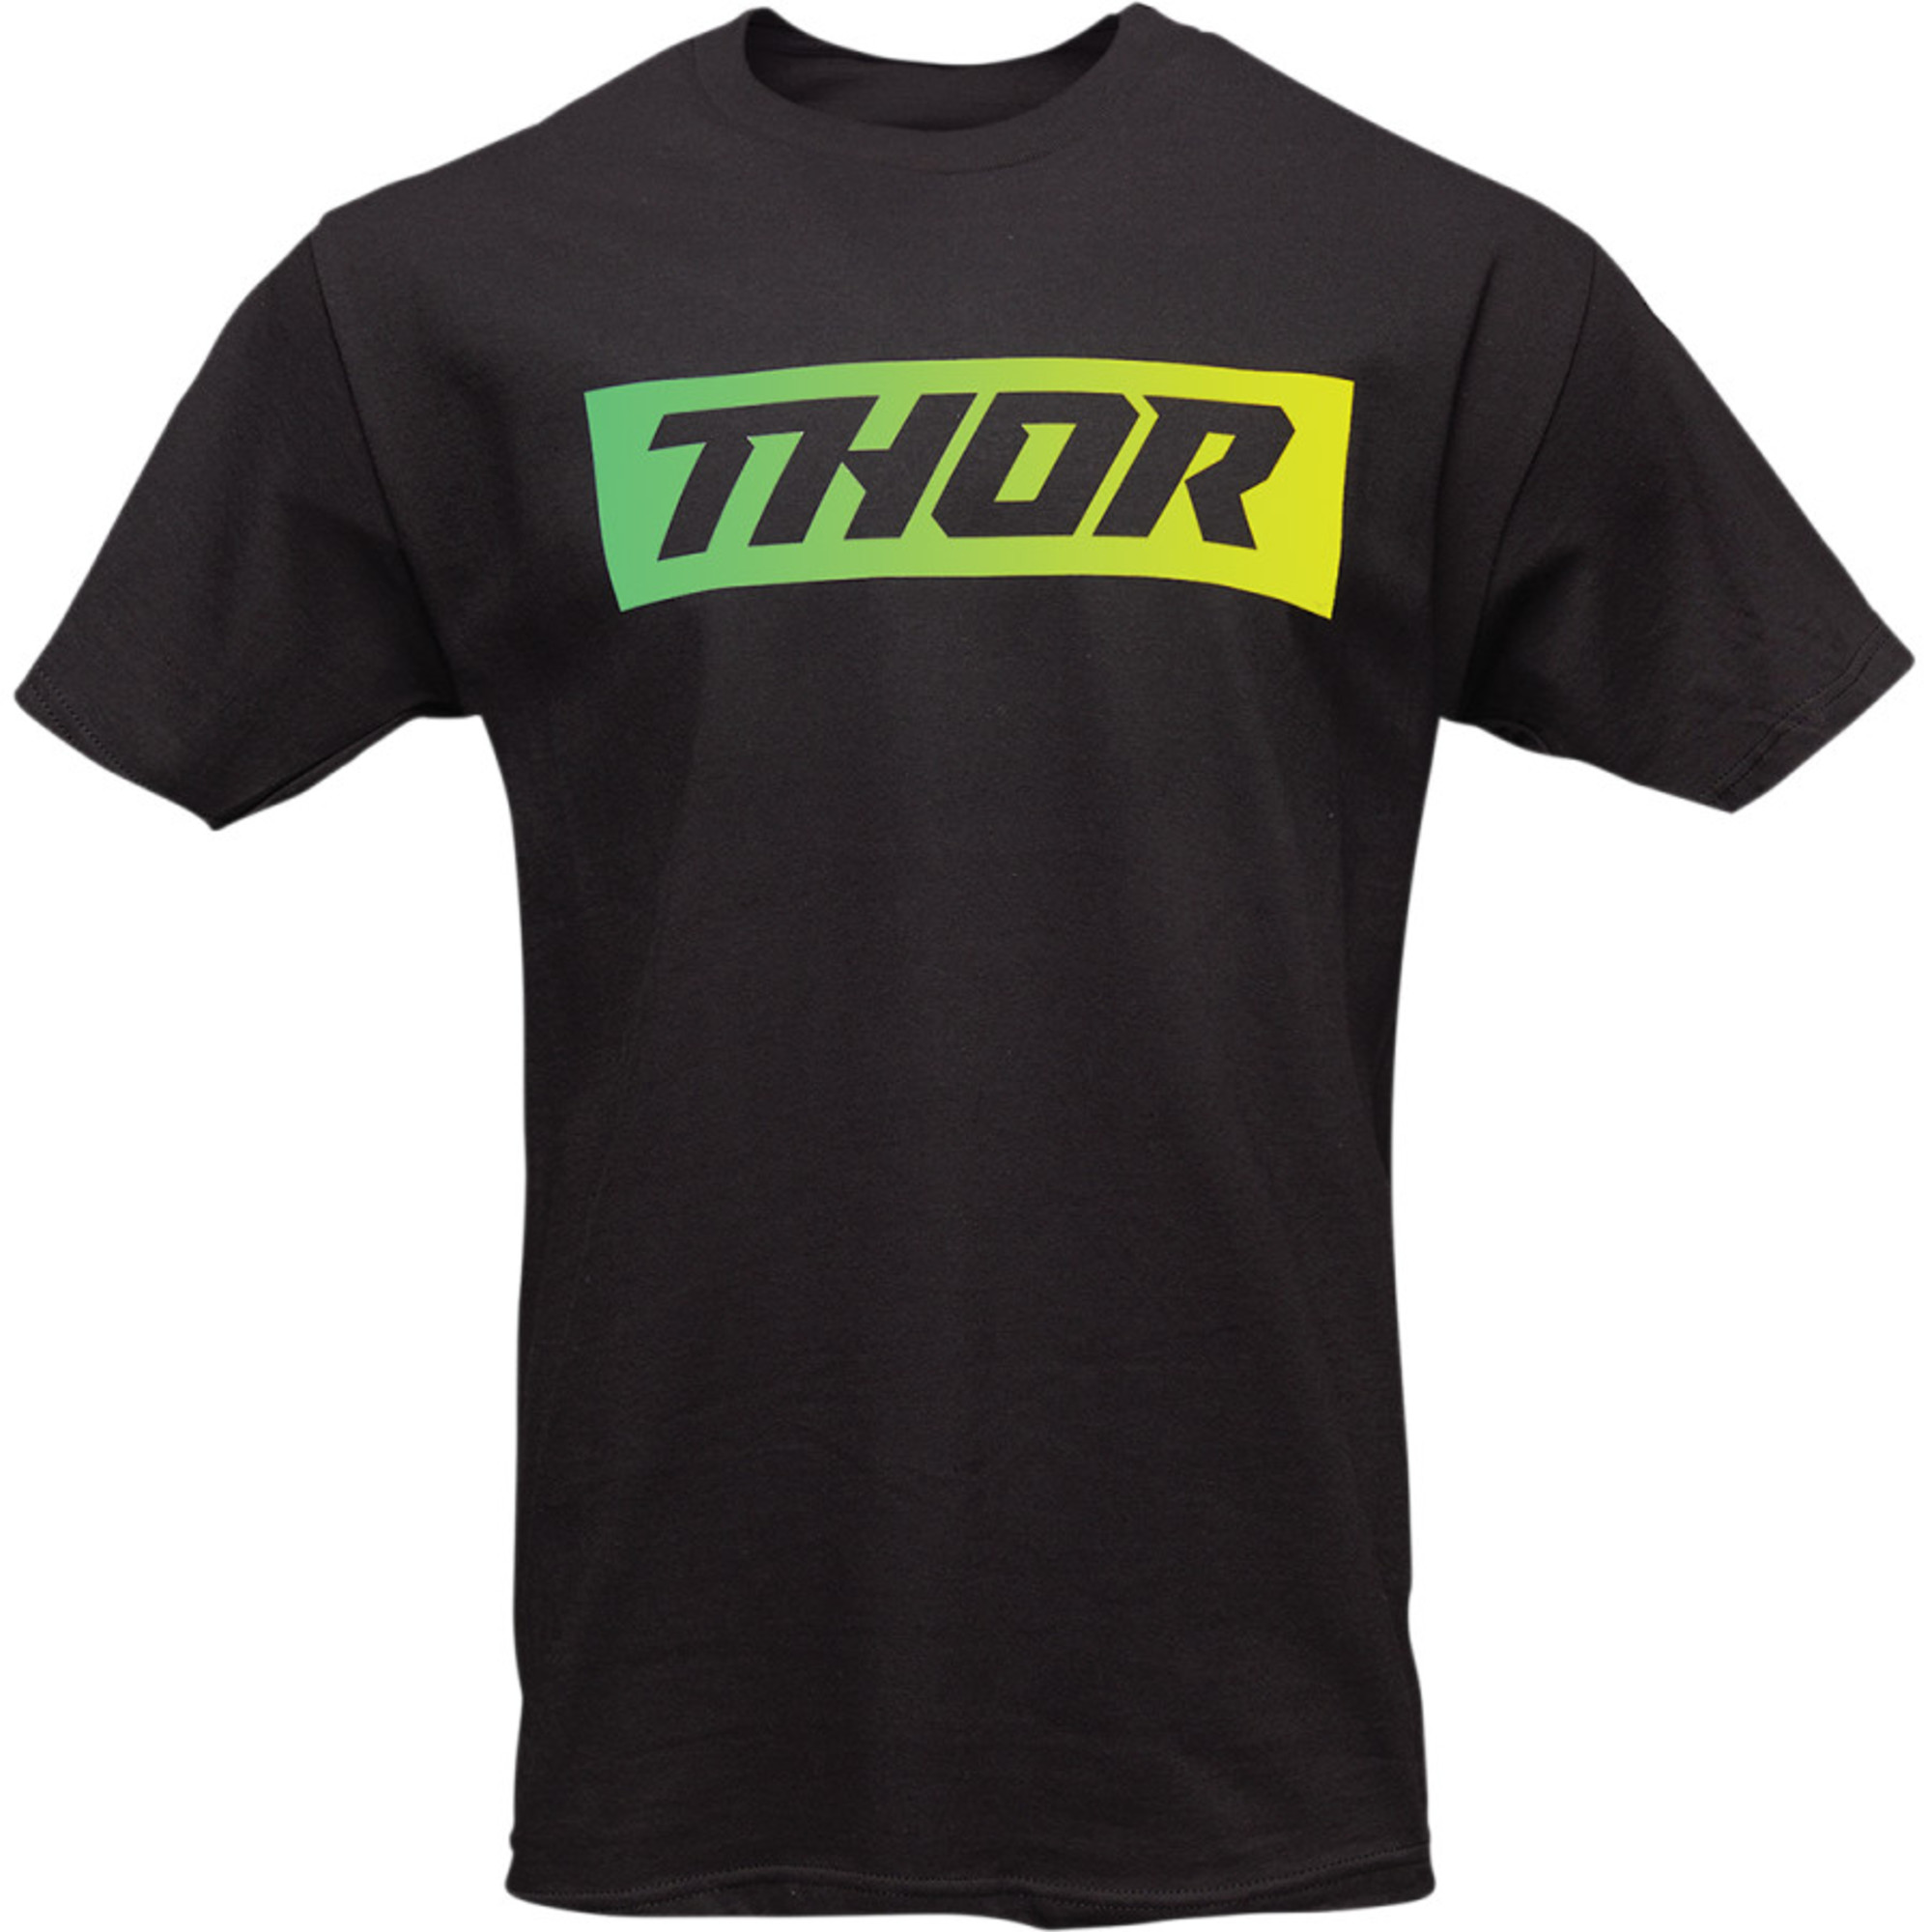 thor t-shirt shirts for men blend